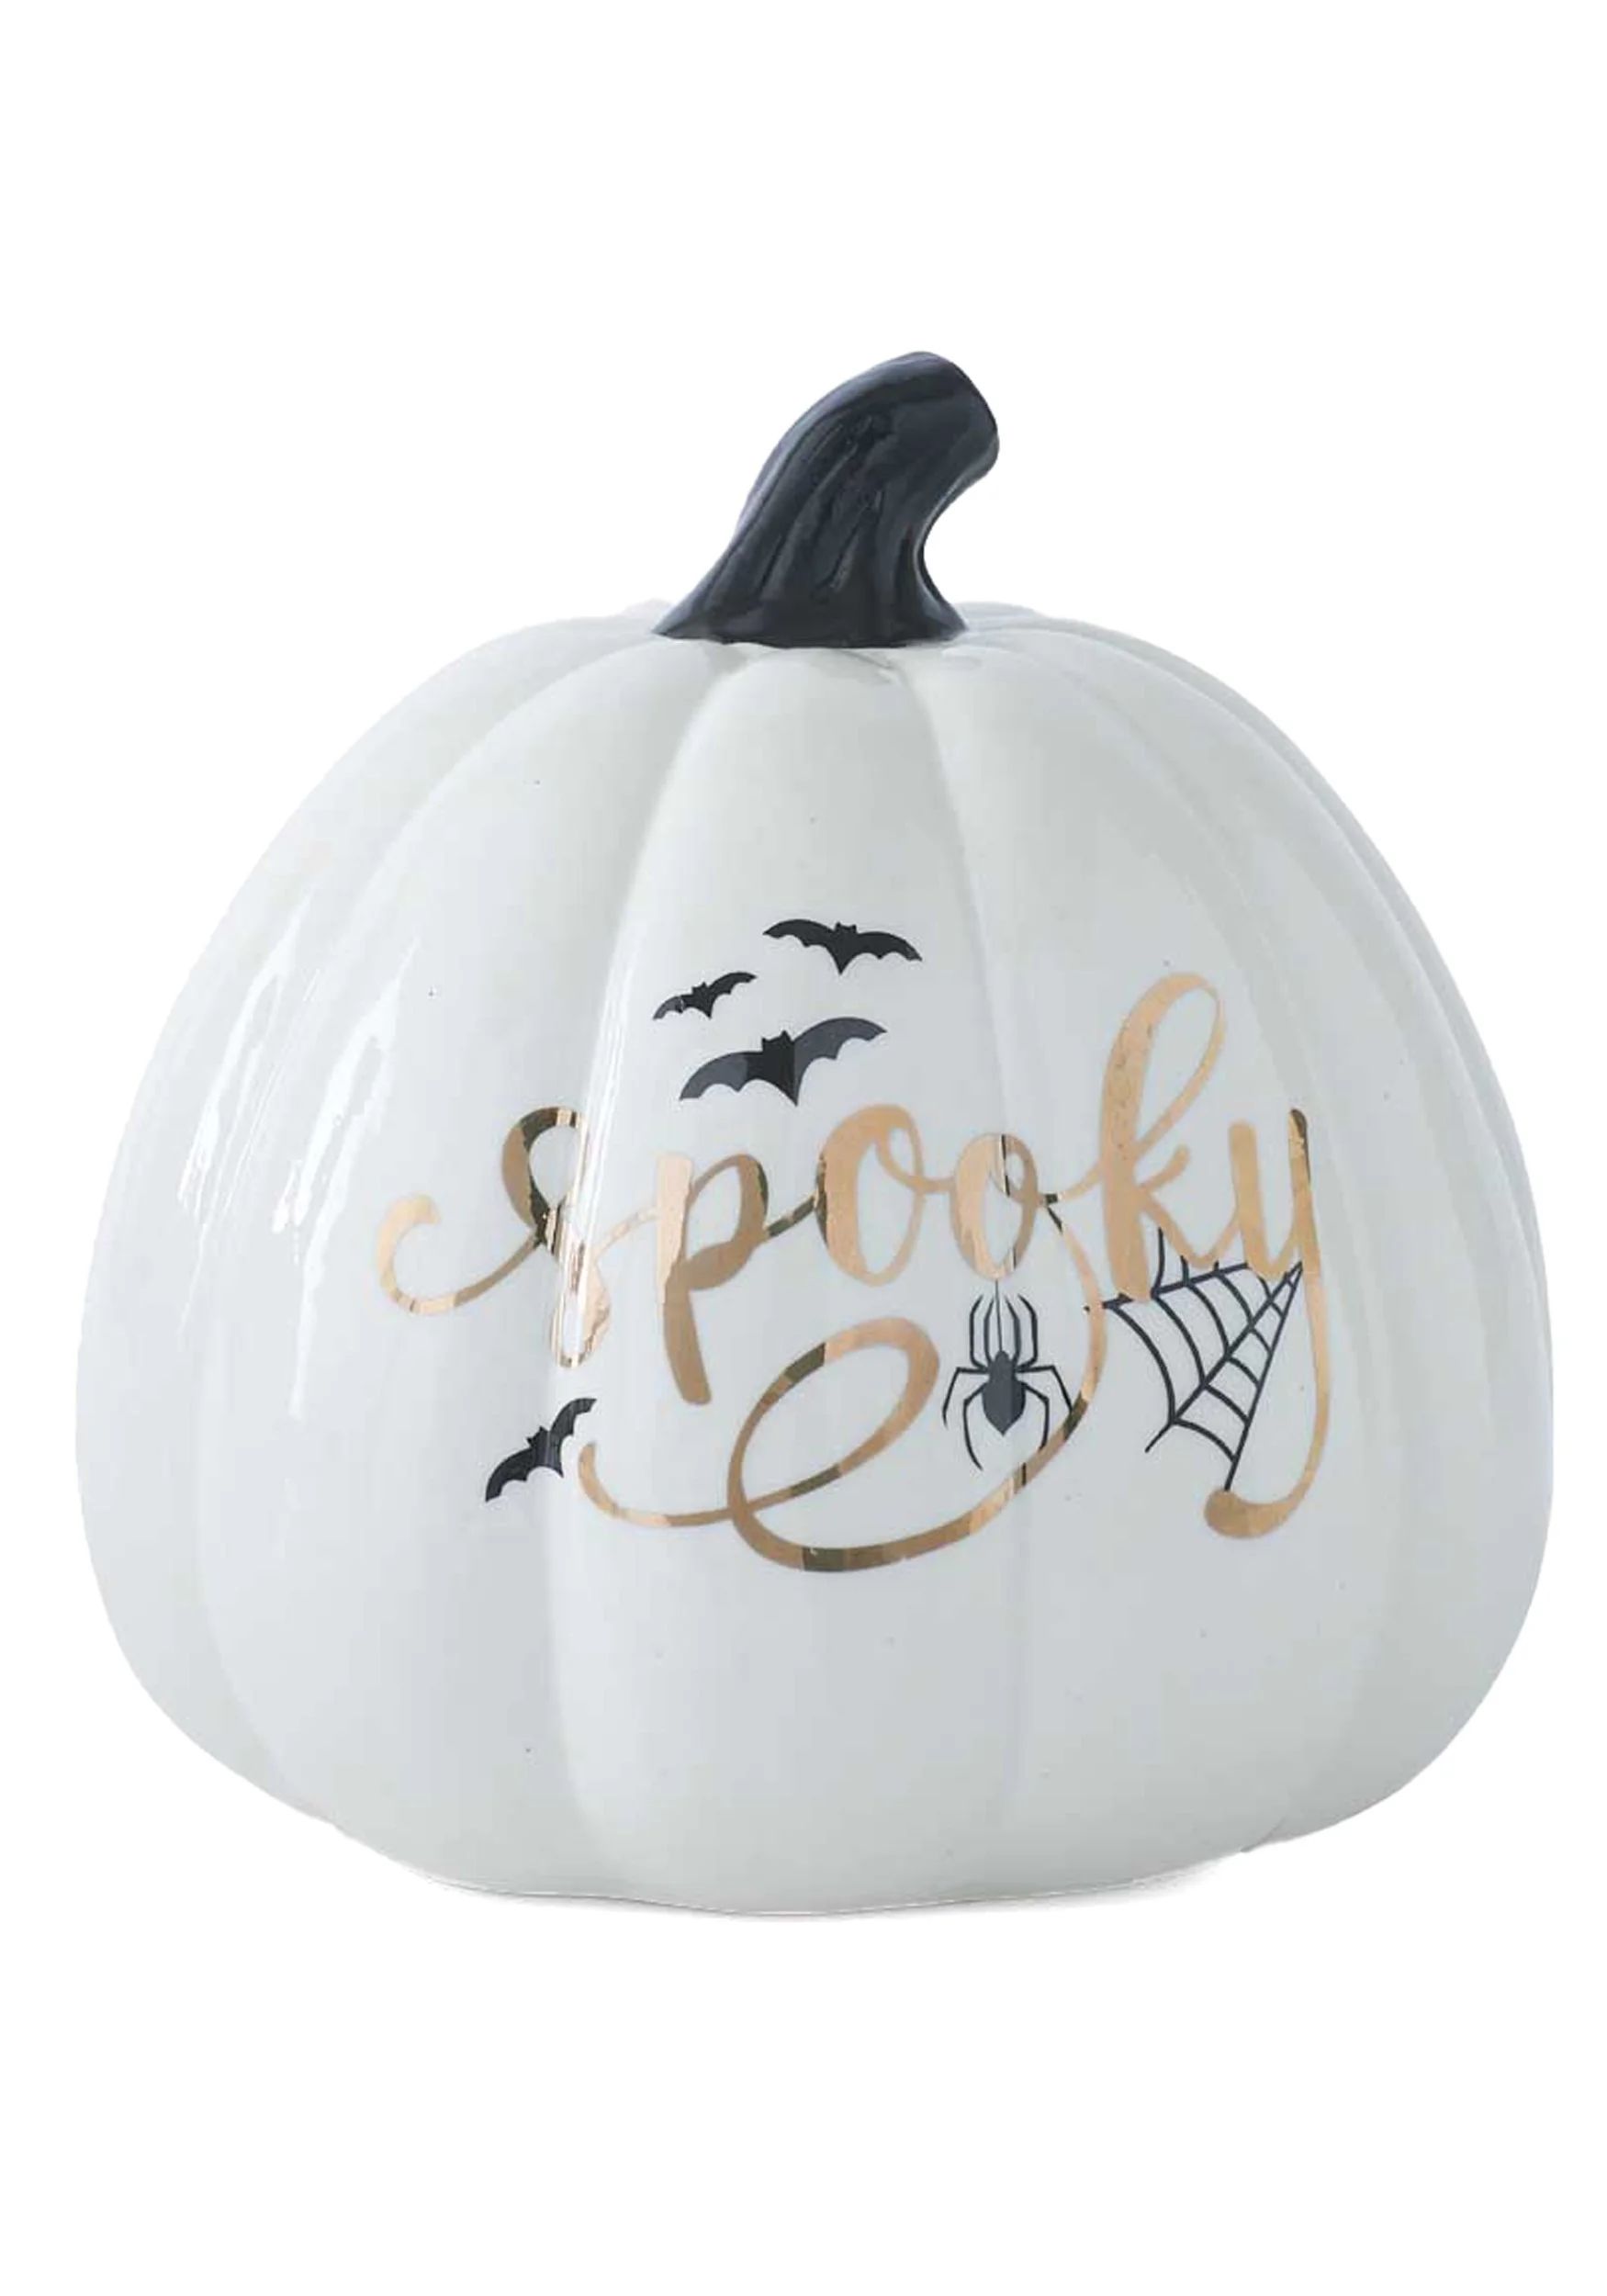 Spooky 6.5" White Ceramic Decal Pumpkin | Walmart (US)